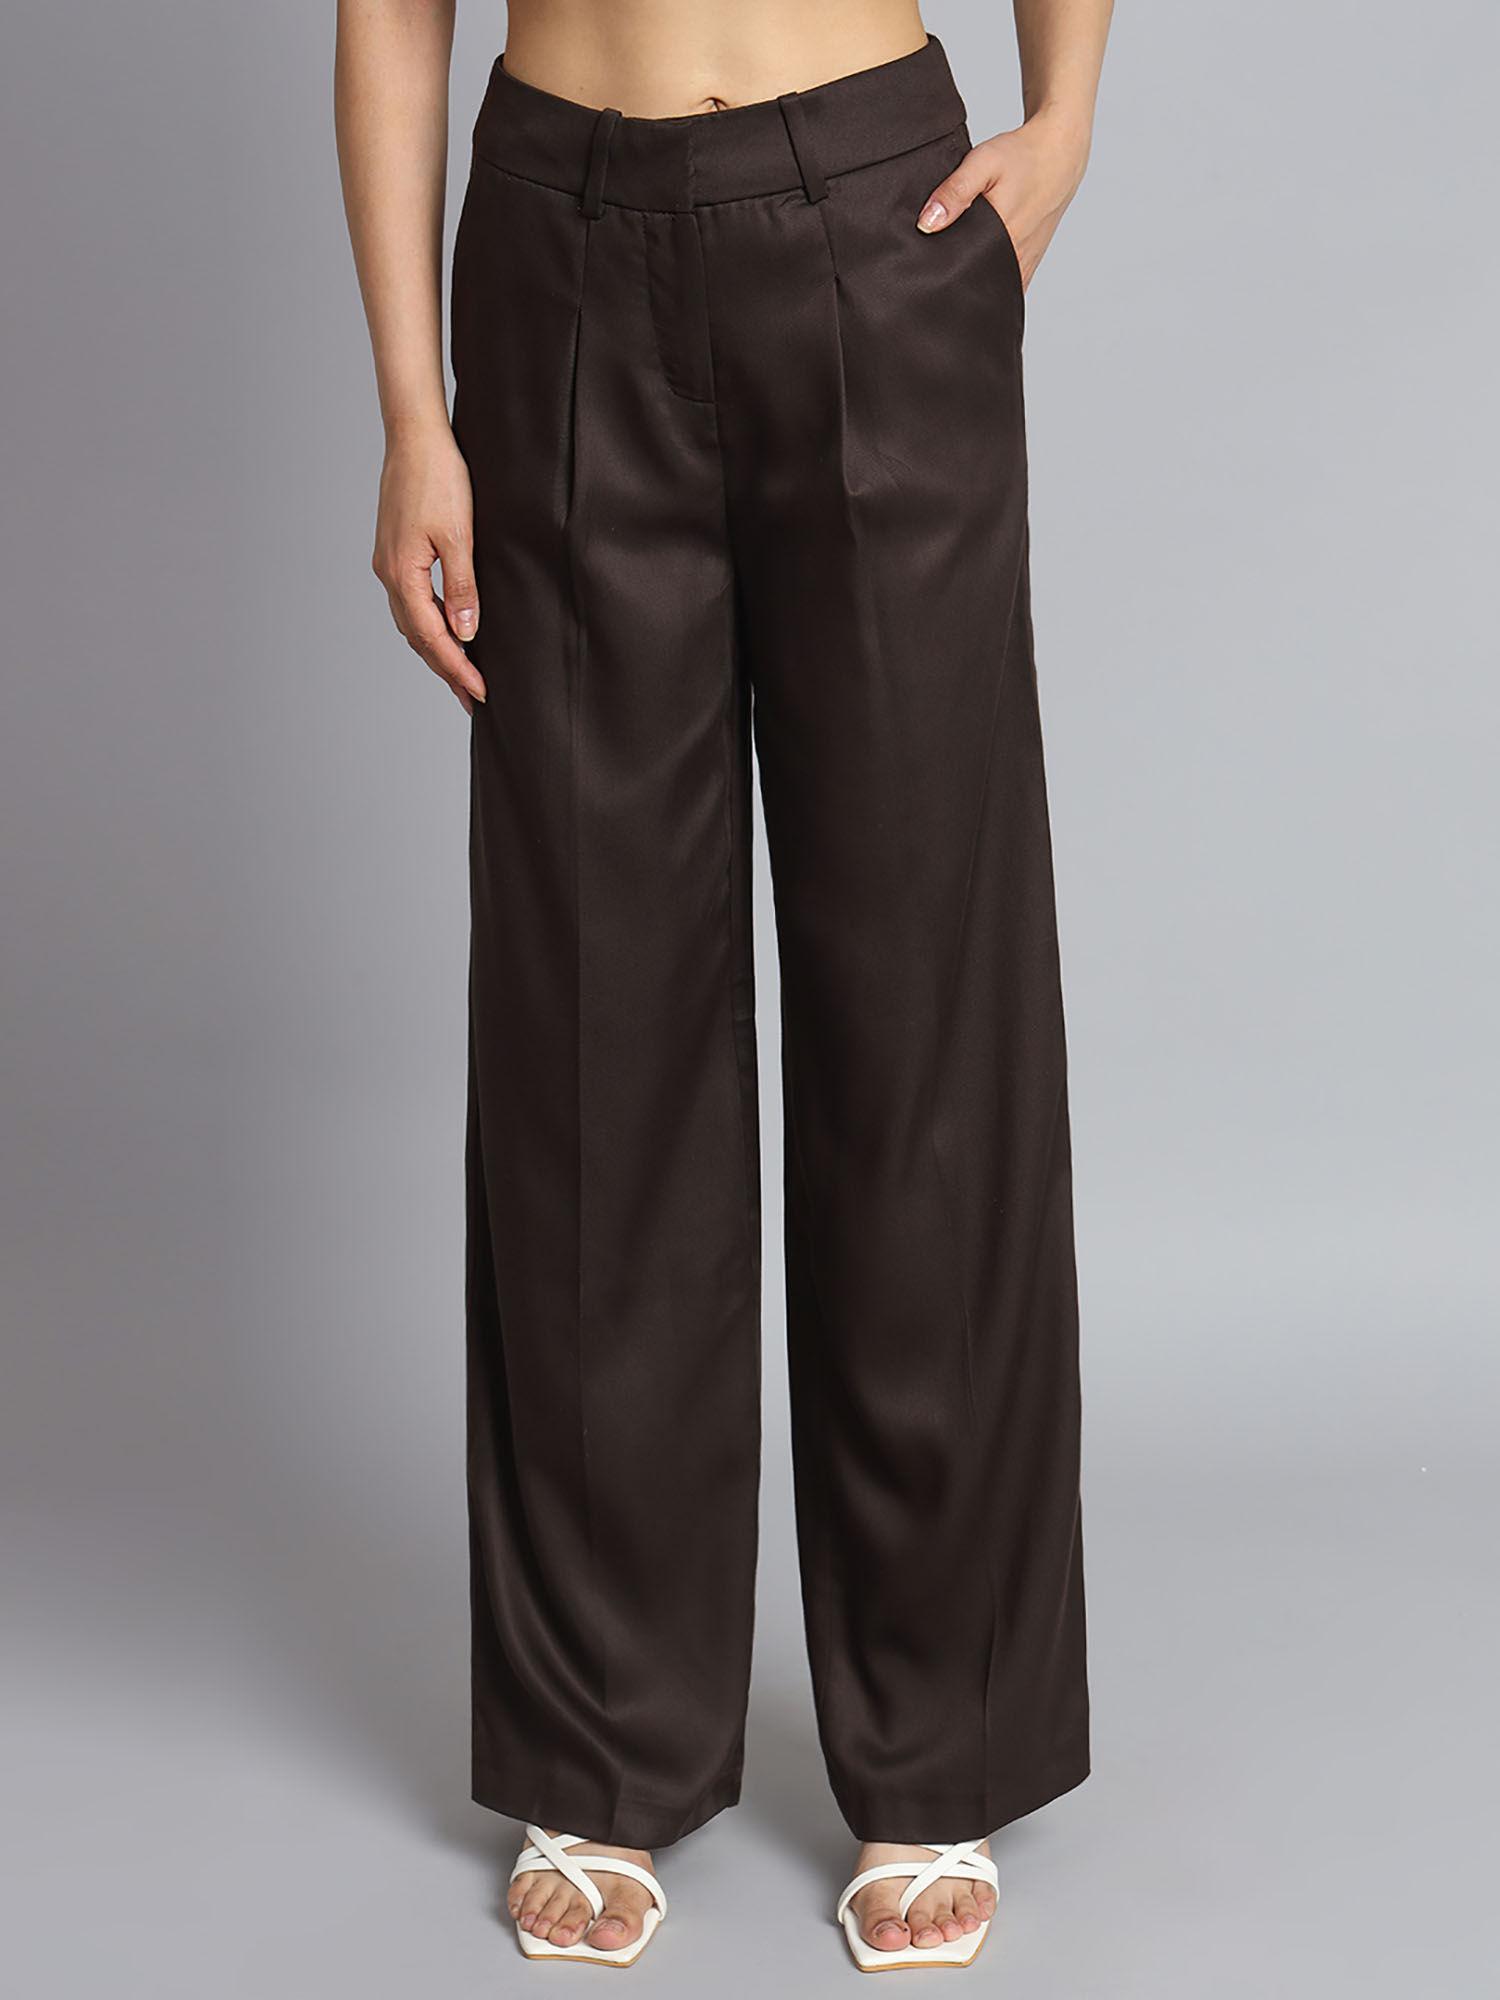 womens regular fit cotton plus size office wear dark brown trouser pant